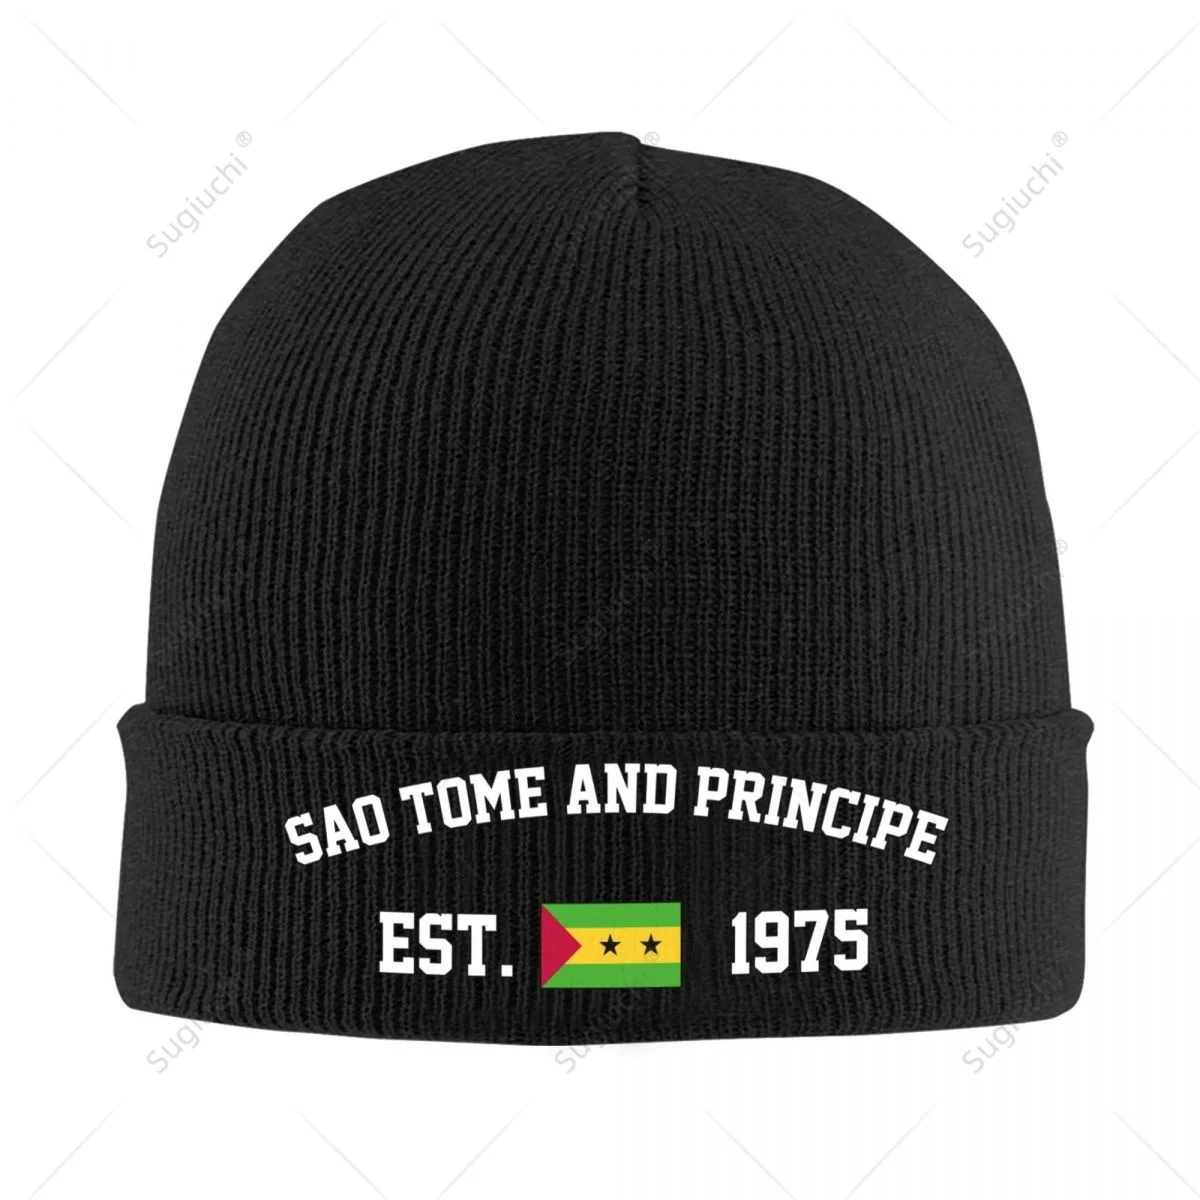 

Unisex Sao Tome And Principe EST.1975 Knitted Hat For Men Women Boys Winter Autumn Beanie Cap Warm Bonnet